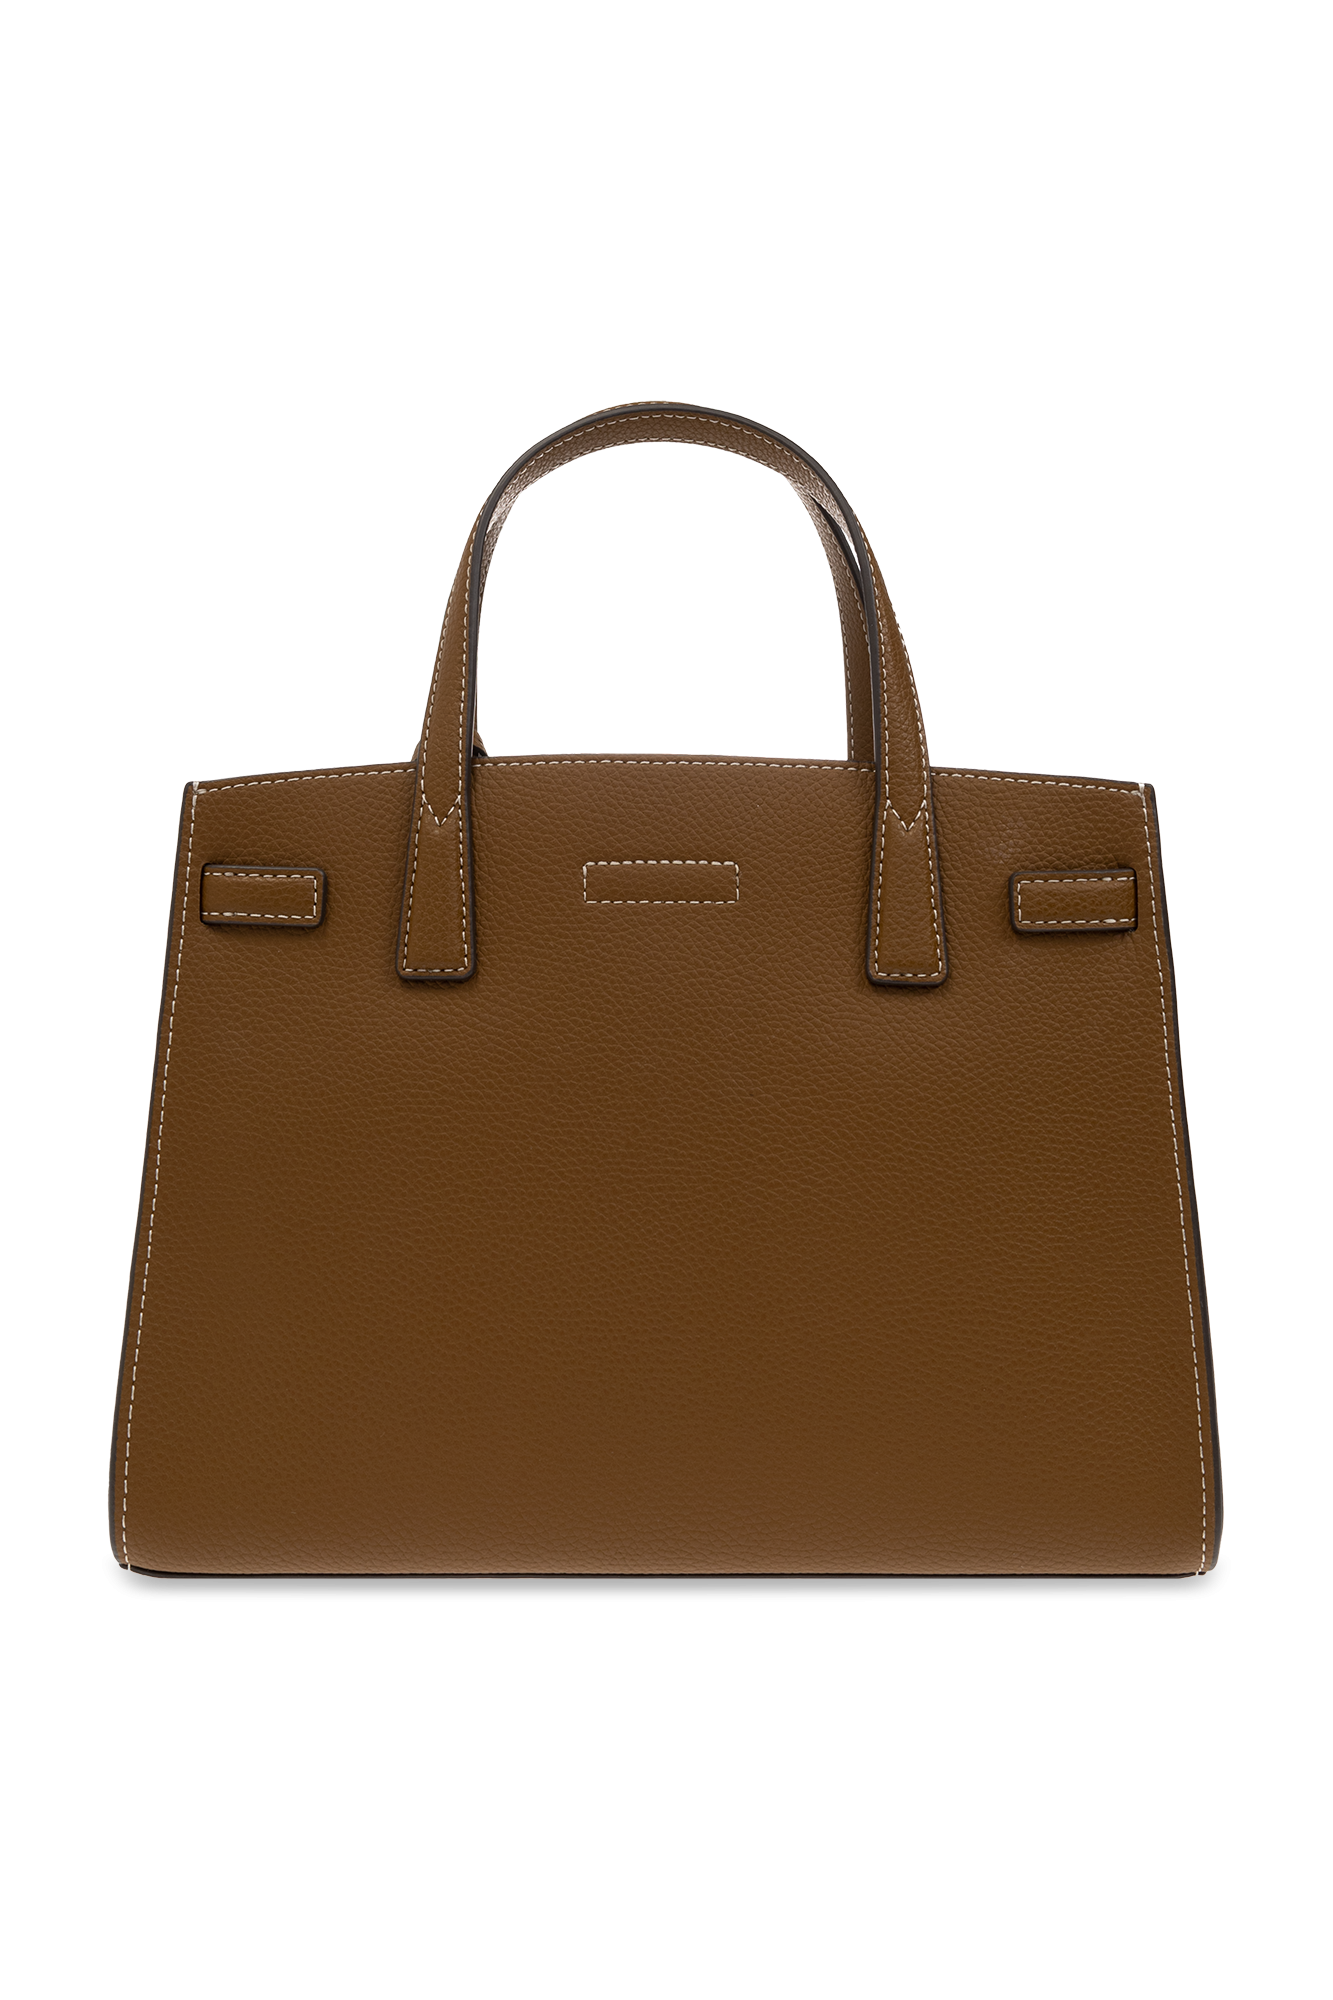 Tory Burch Robinson Mini Patent Leather Shoulder Bag in Orange